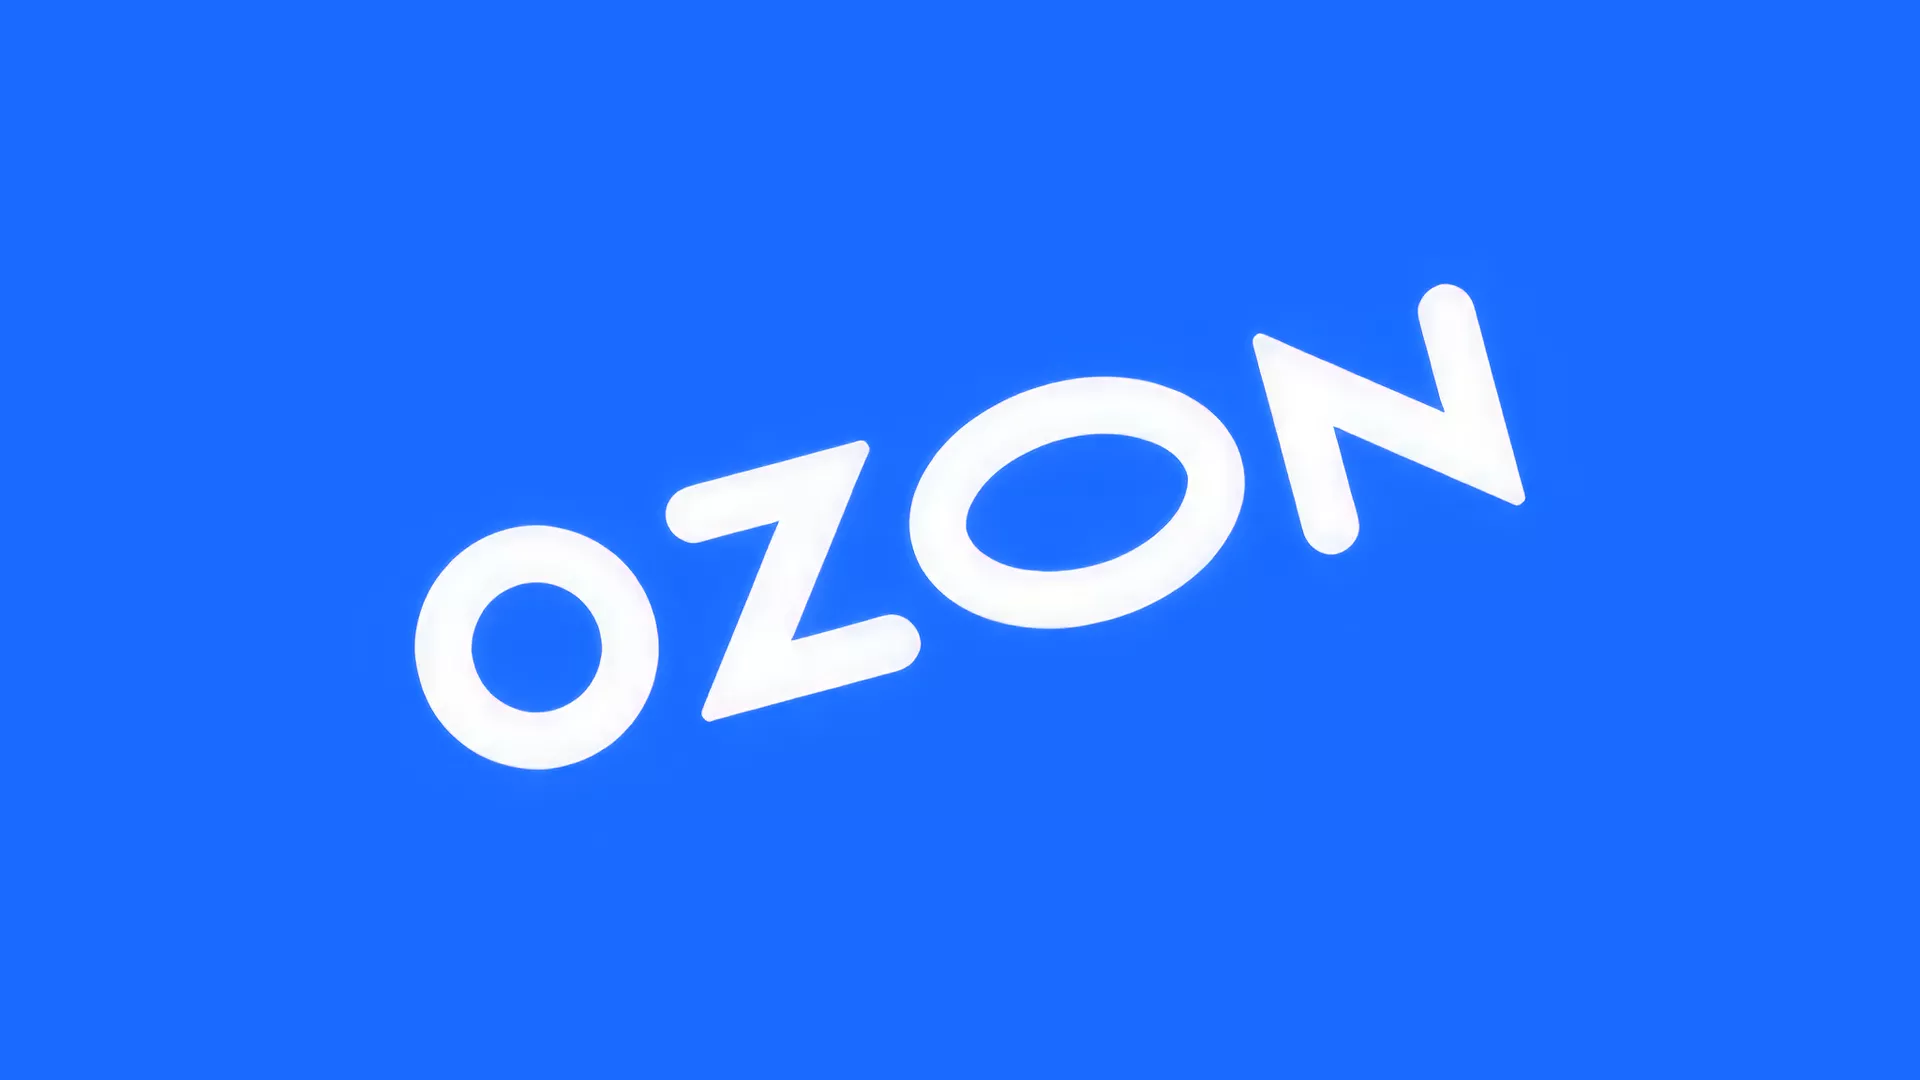 Ozon sports. OZON. Ярлык Озон. OZON картинки. Логотип Озон круглый.